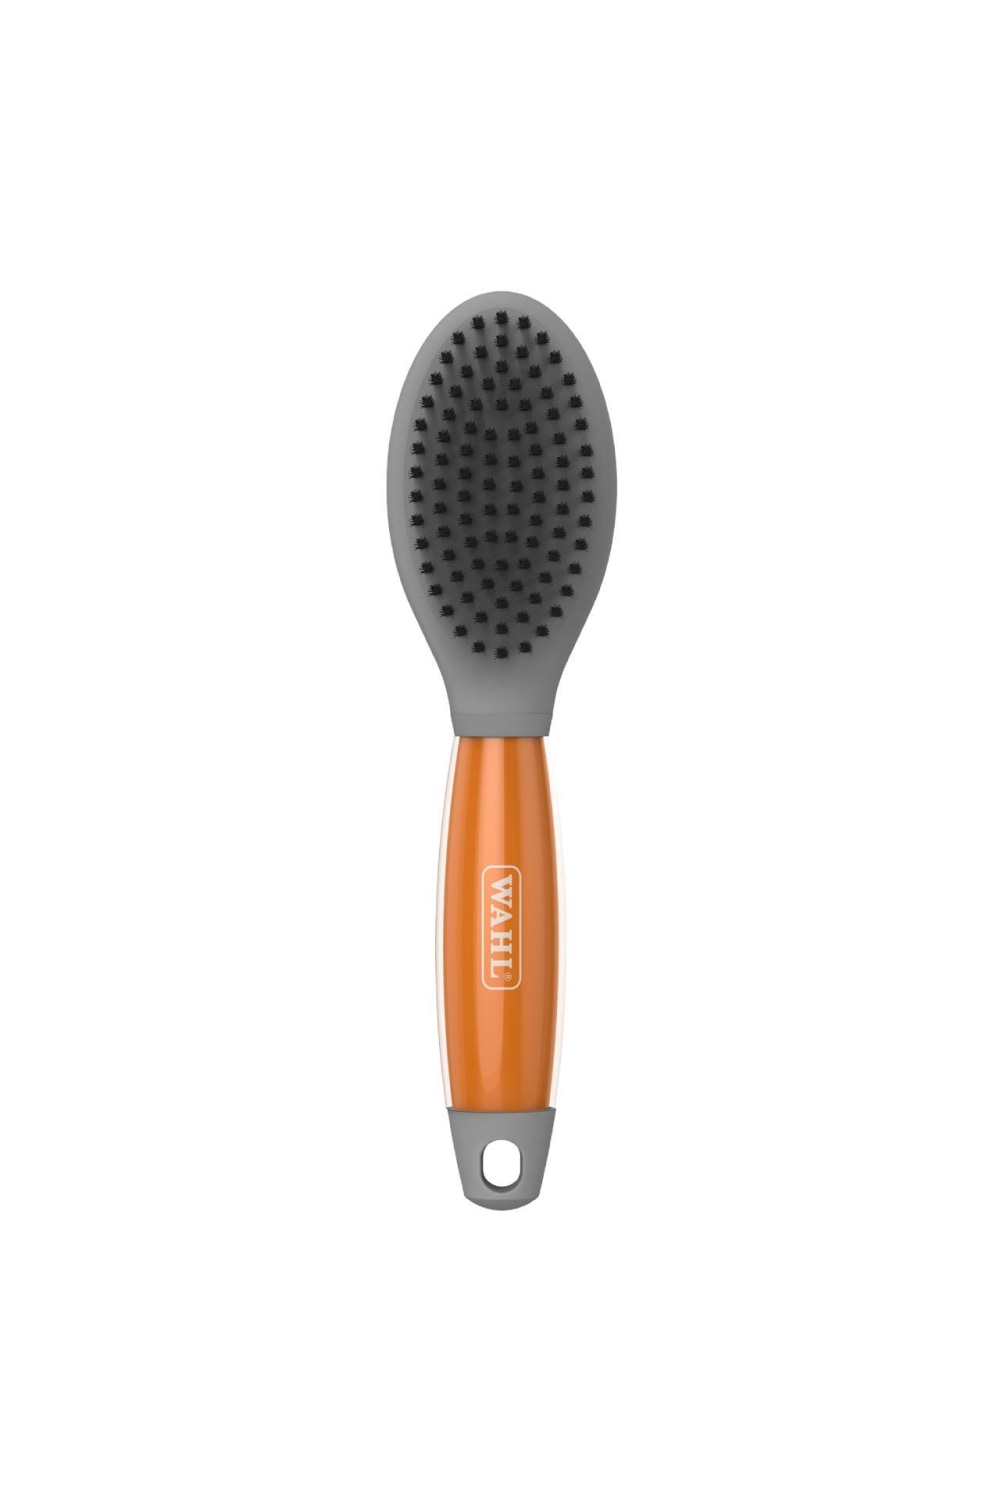 Wahl Gel Handle Double Sided Soft Brush (Gray/Orange) (One Size)